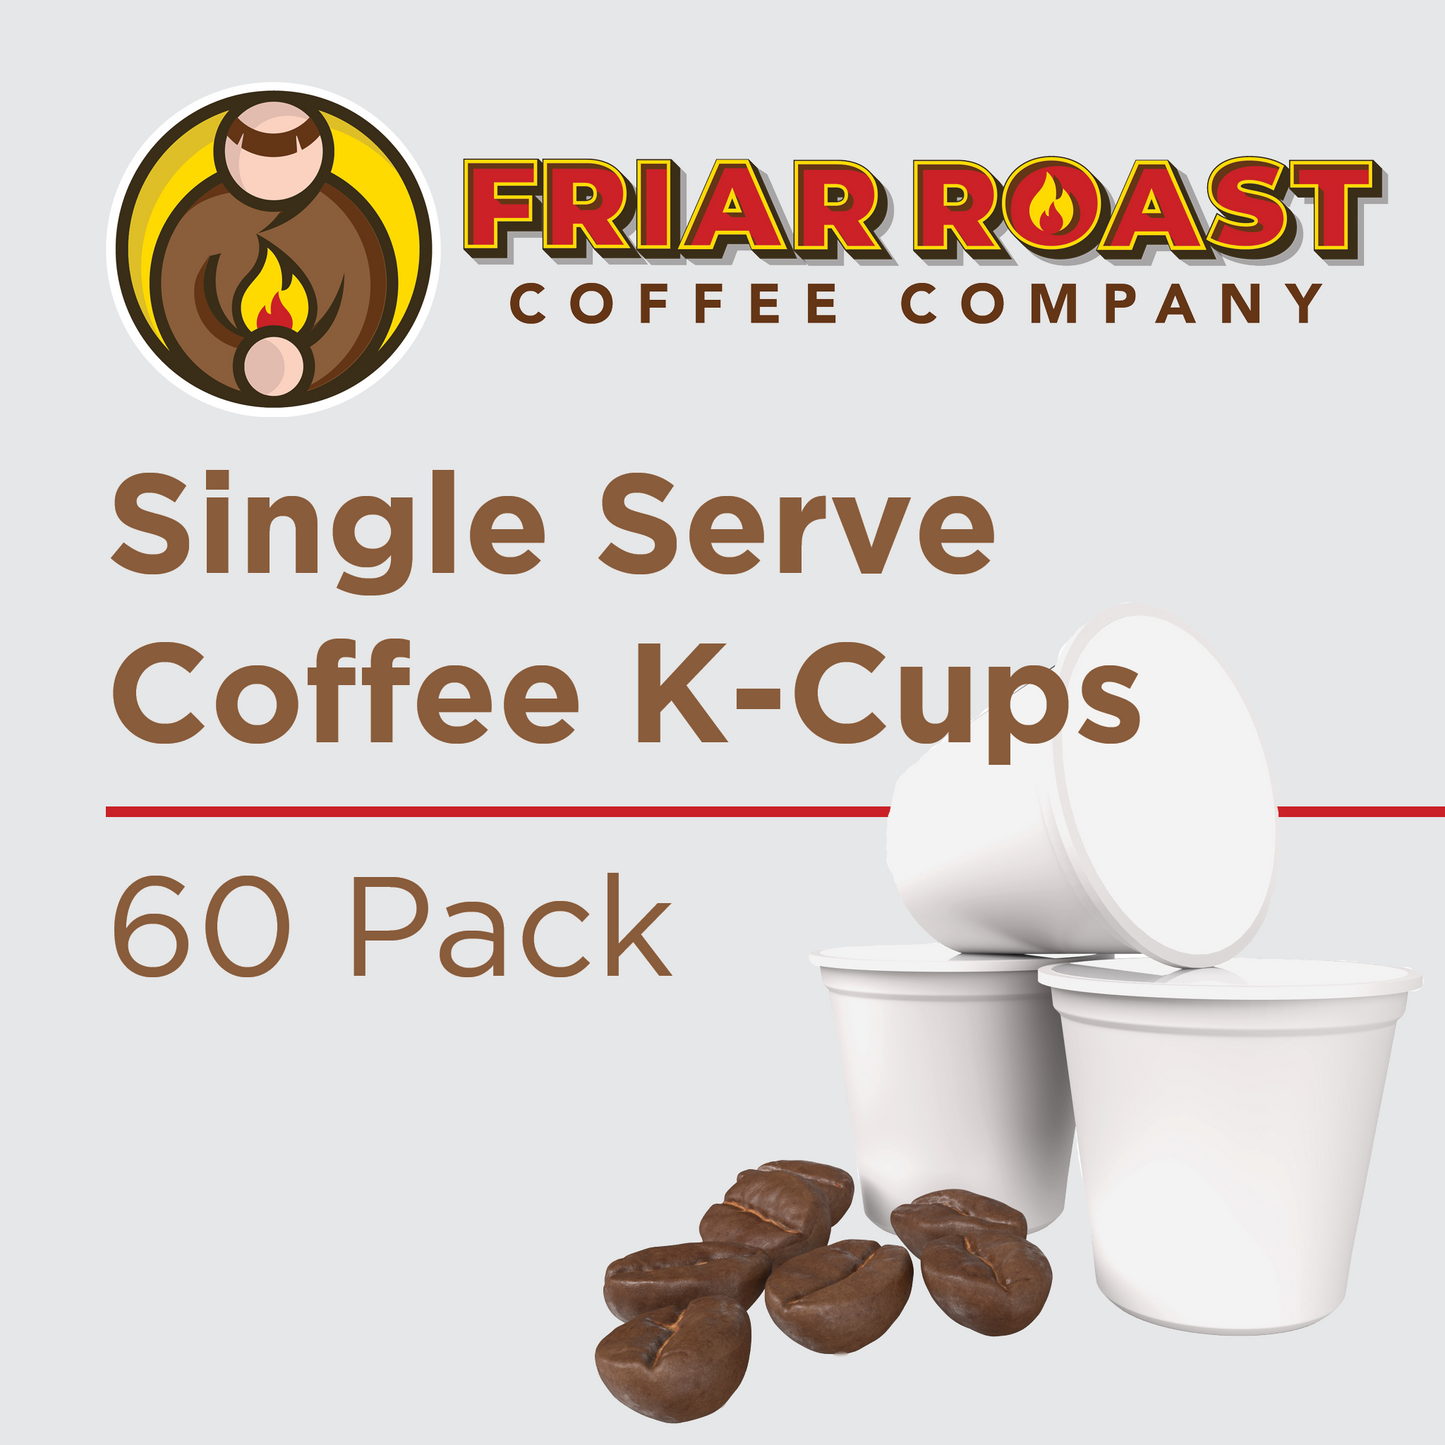 60 Pack - Single Serve Coffee K-Cups